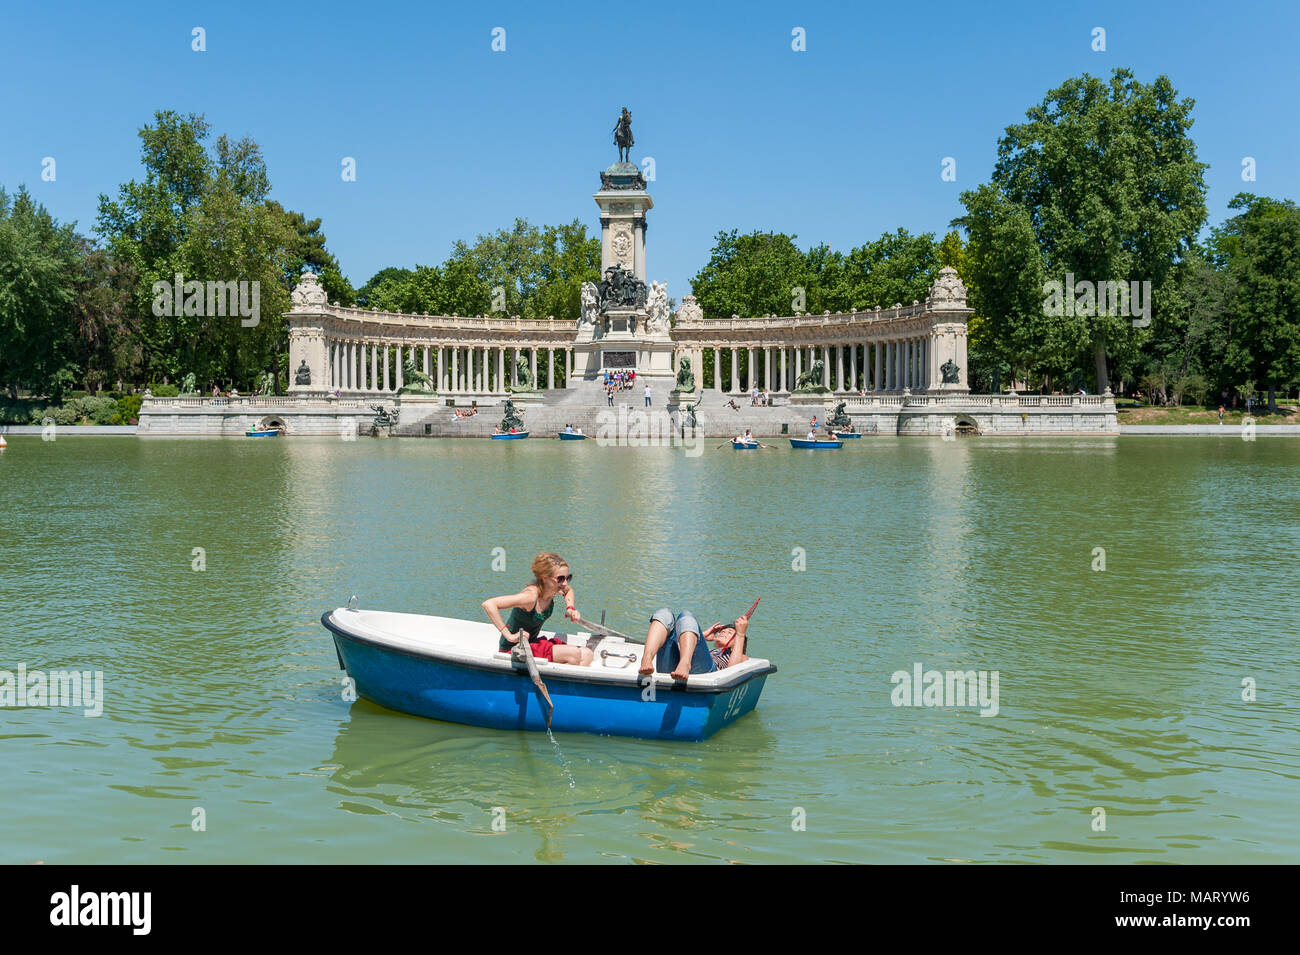 Young women having fun on the boating lake in Buen Retiro park, Madrid, Spain Stock Photo